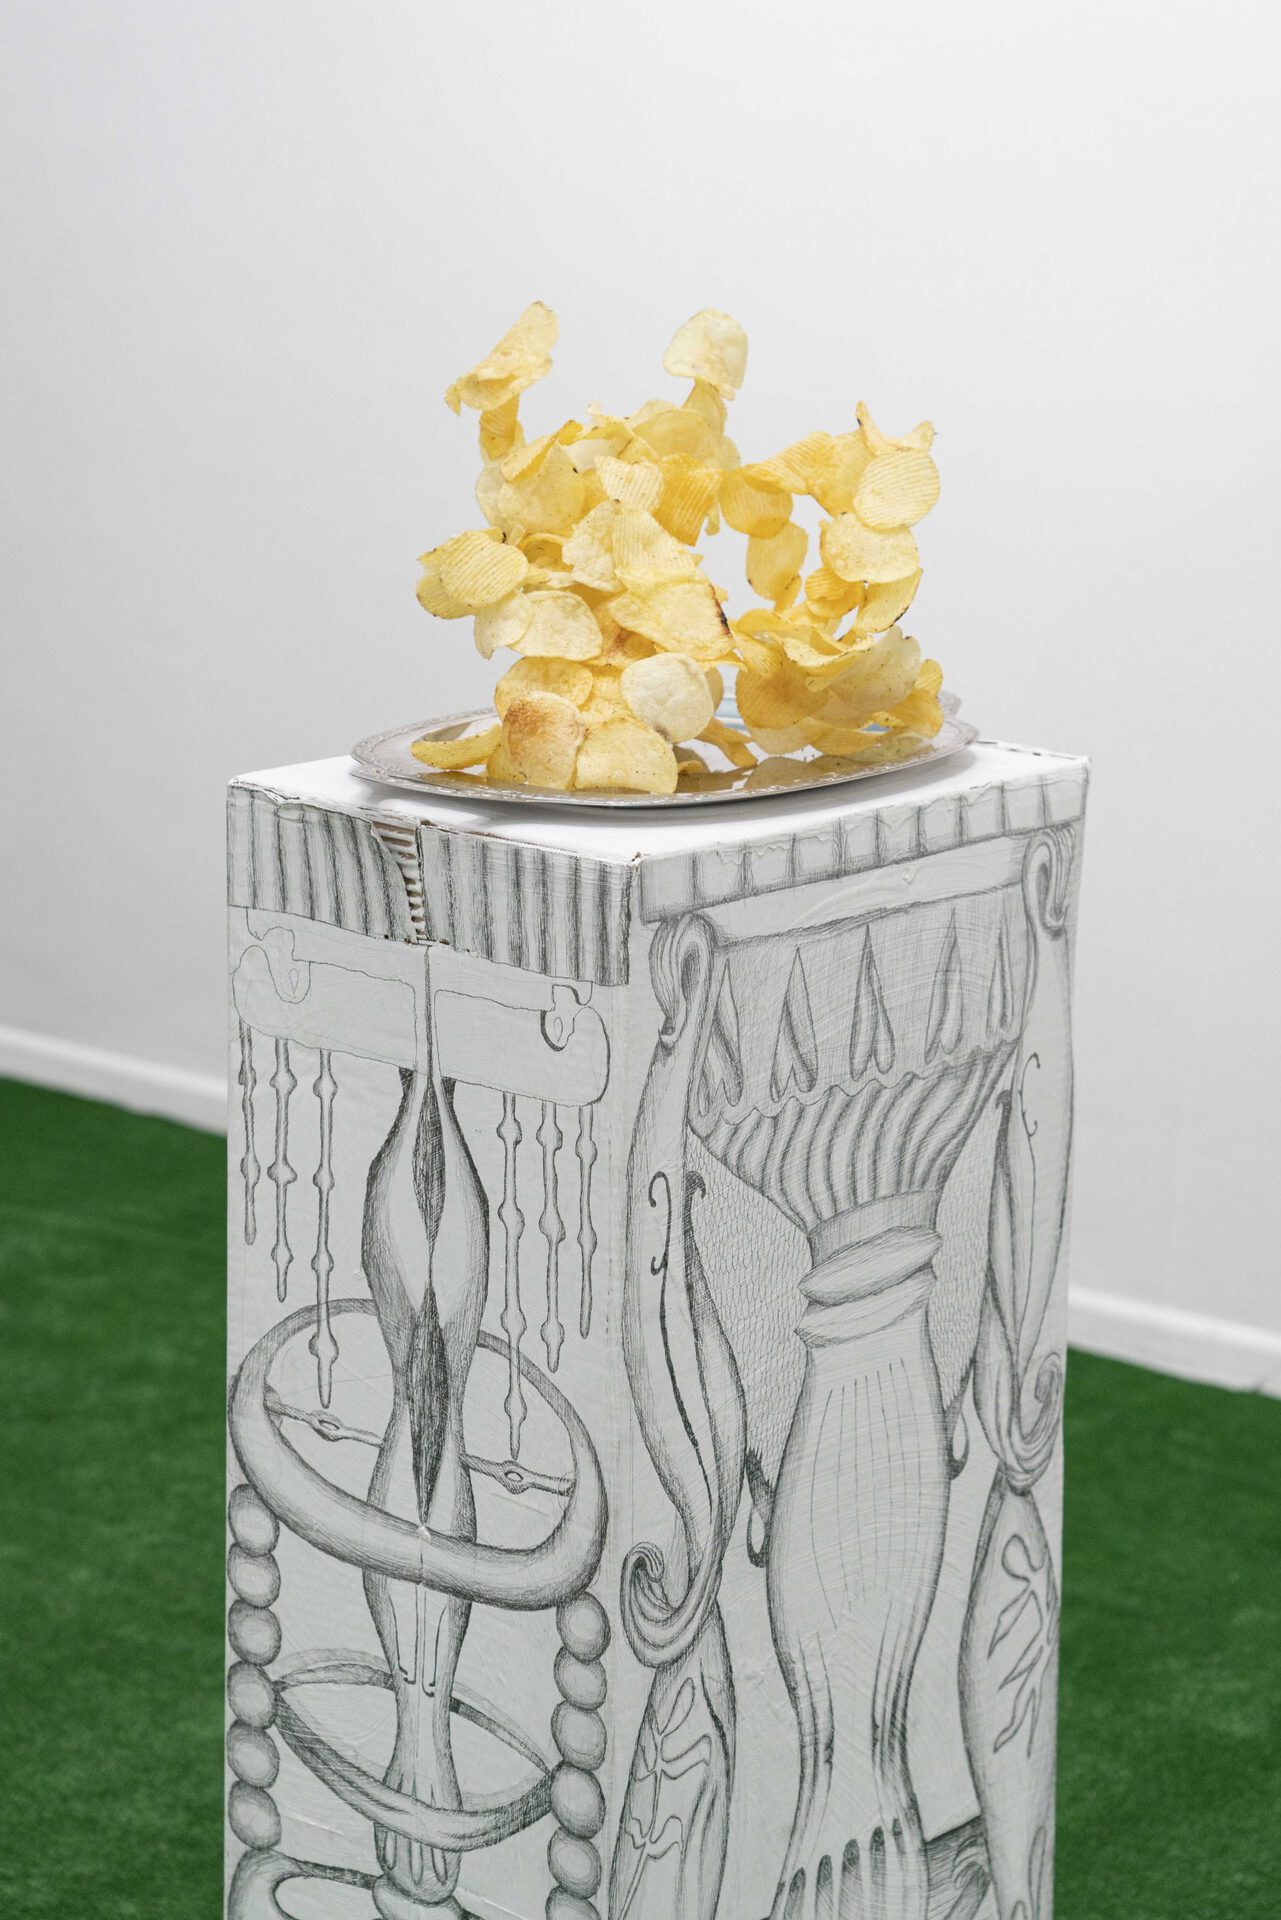 Wiktoria Kieniksman, “Chips sculpture”, 2021, instalation, 37x27x110cm